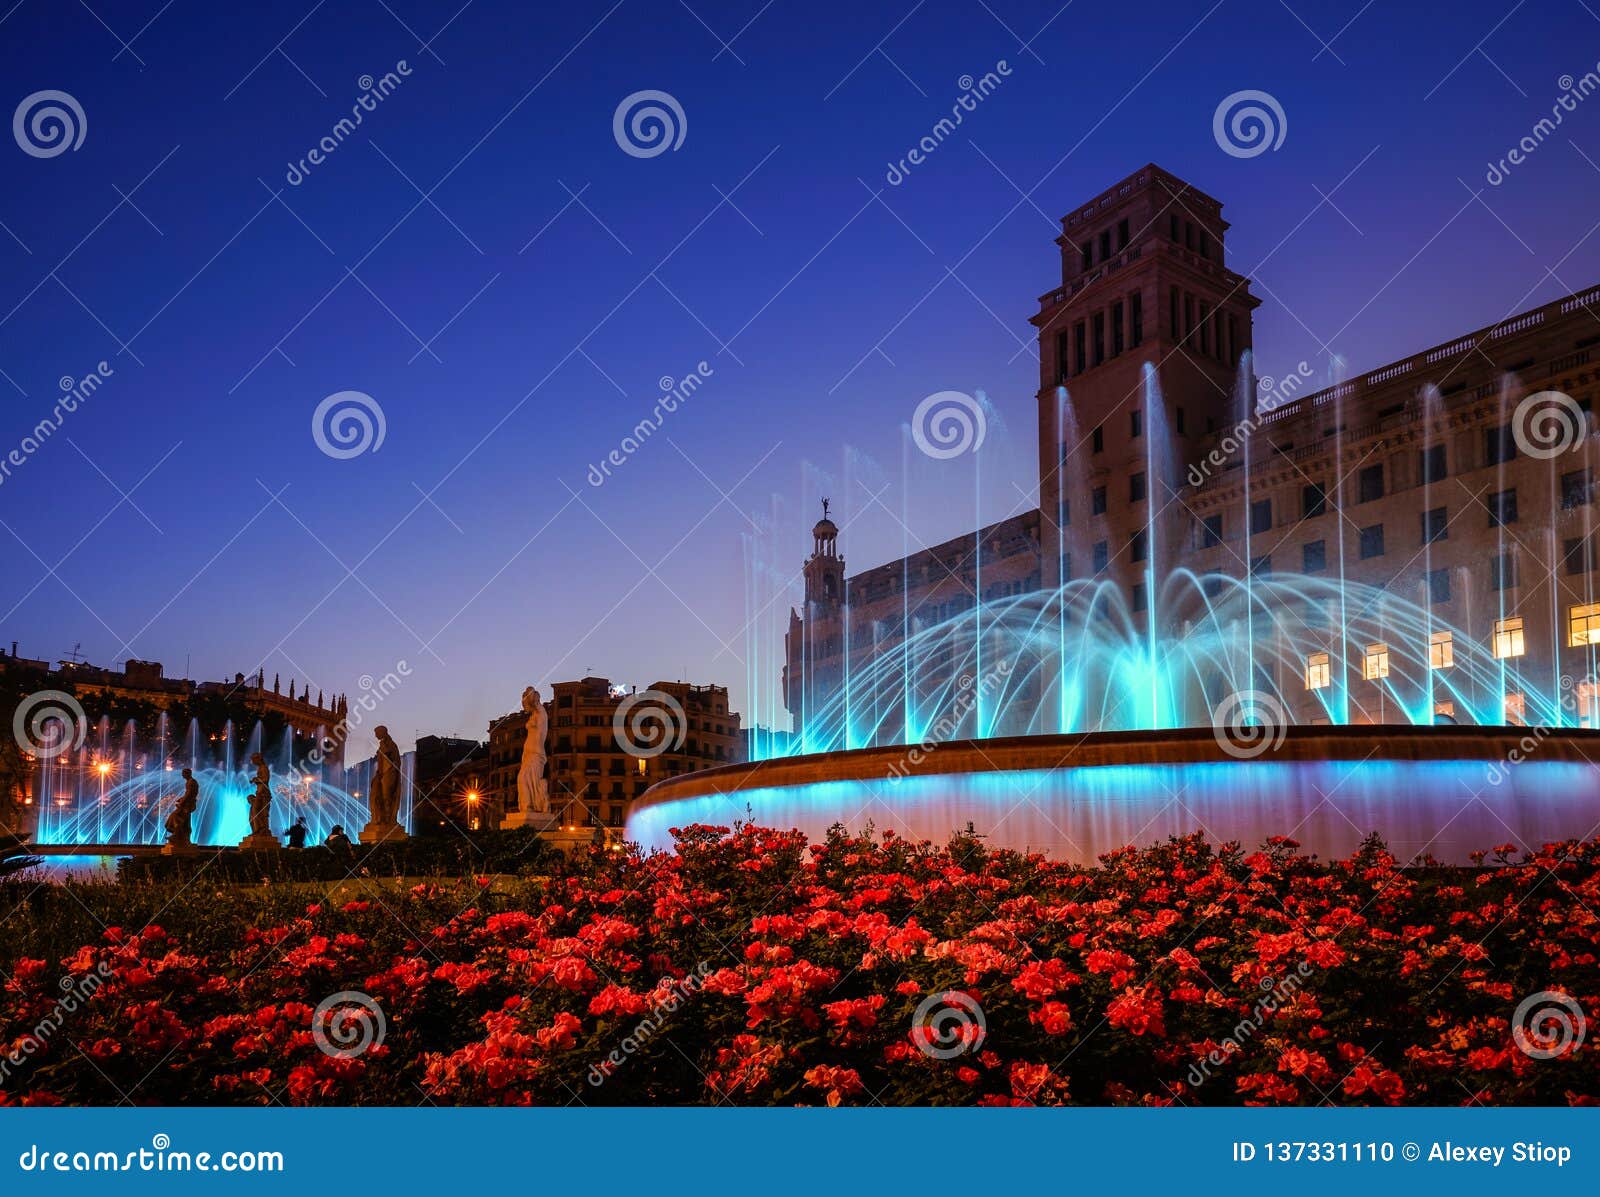 plaza de catalunya fountains